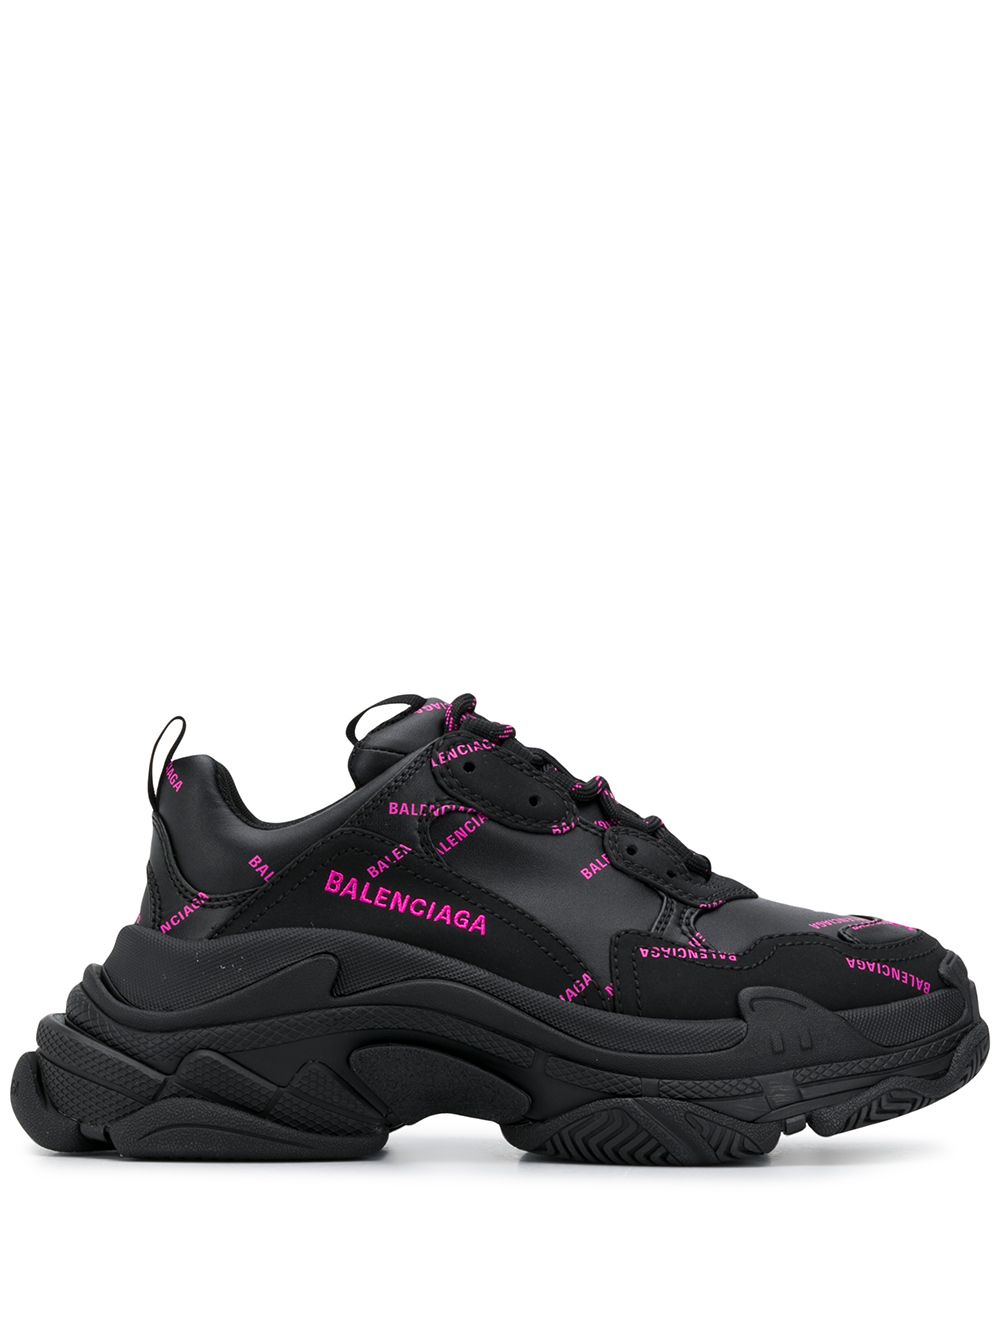 Triple S Leather Sneakers дамски обувки Balenciaga 840703650_39